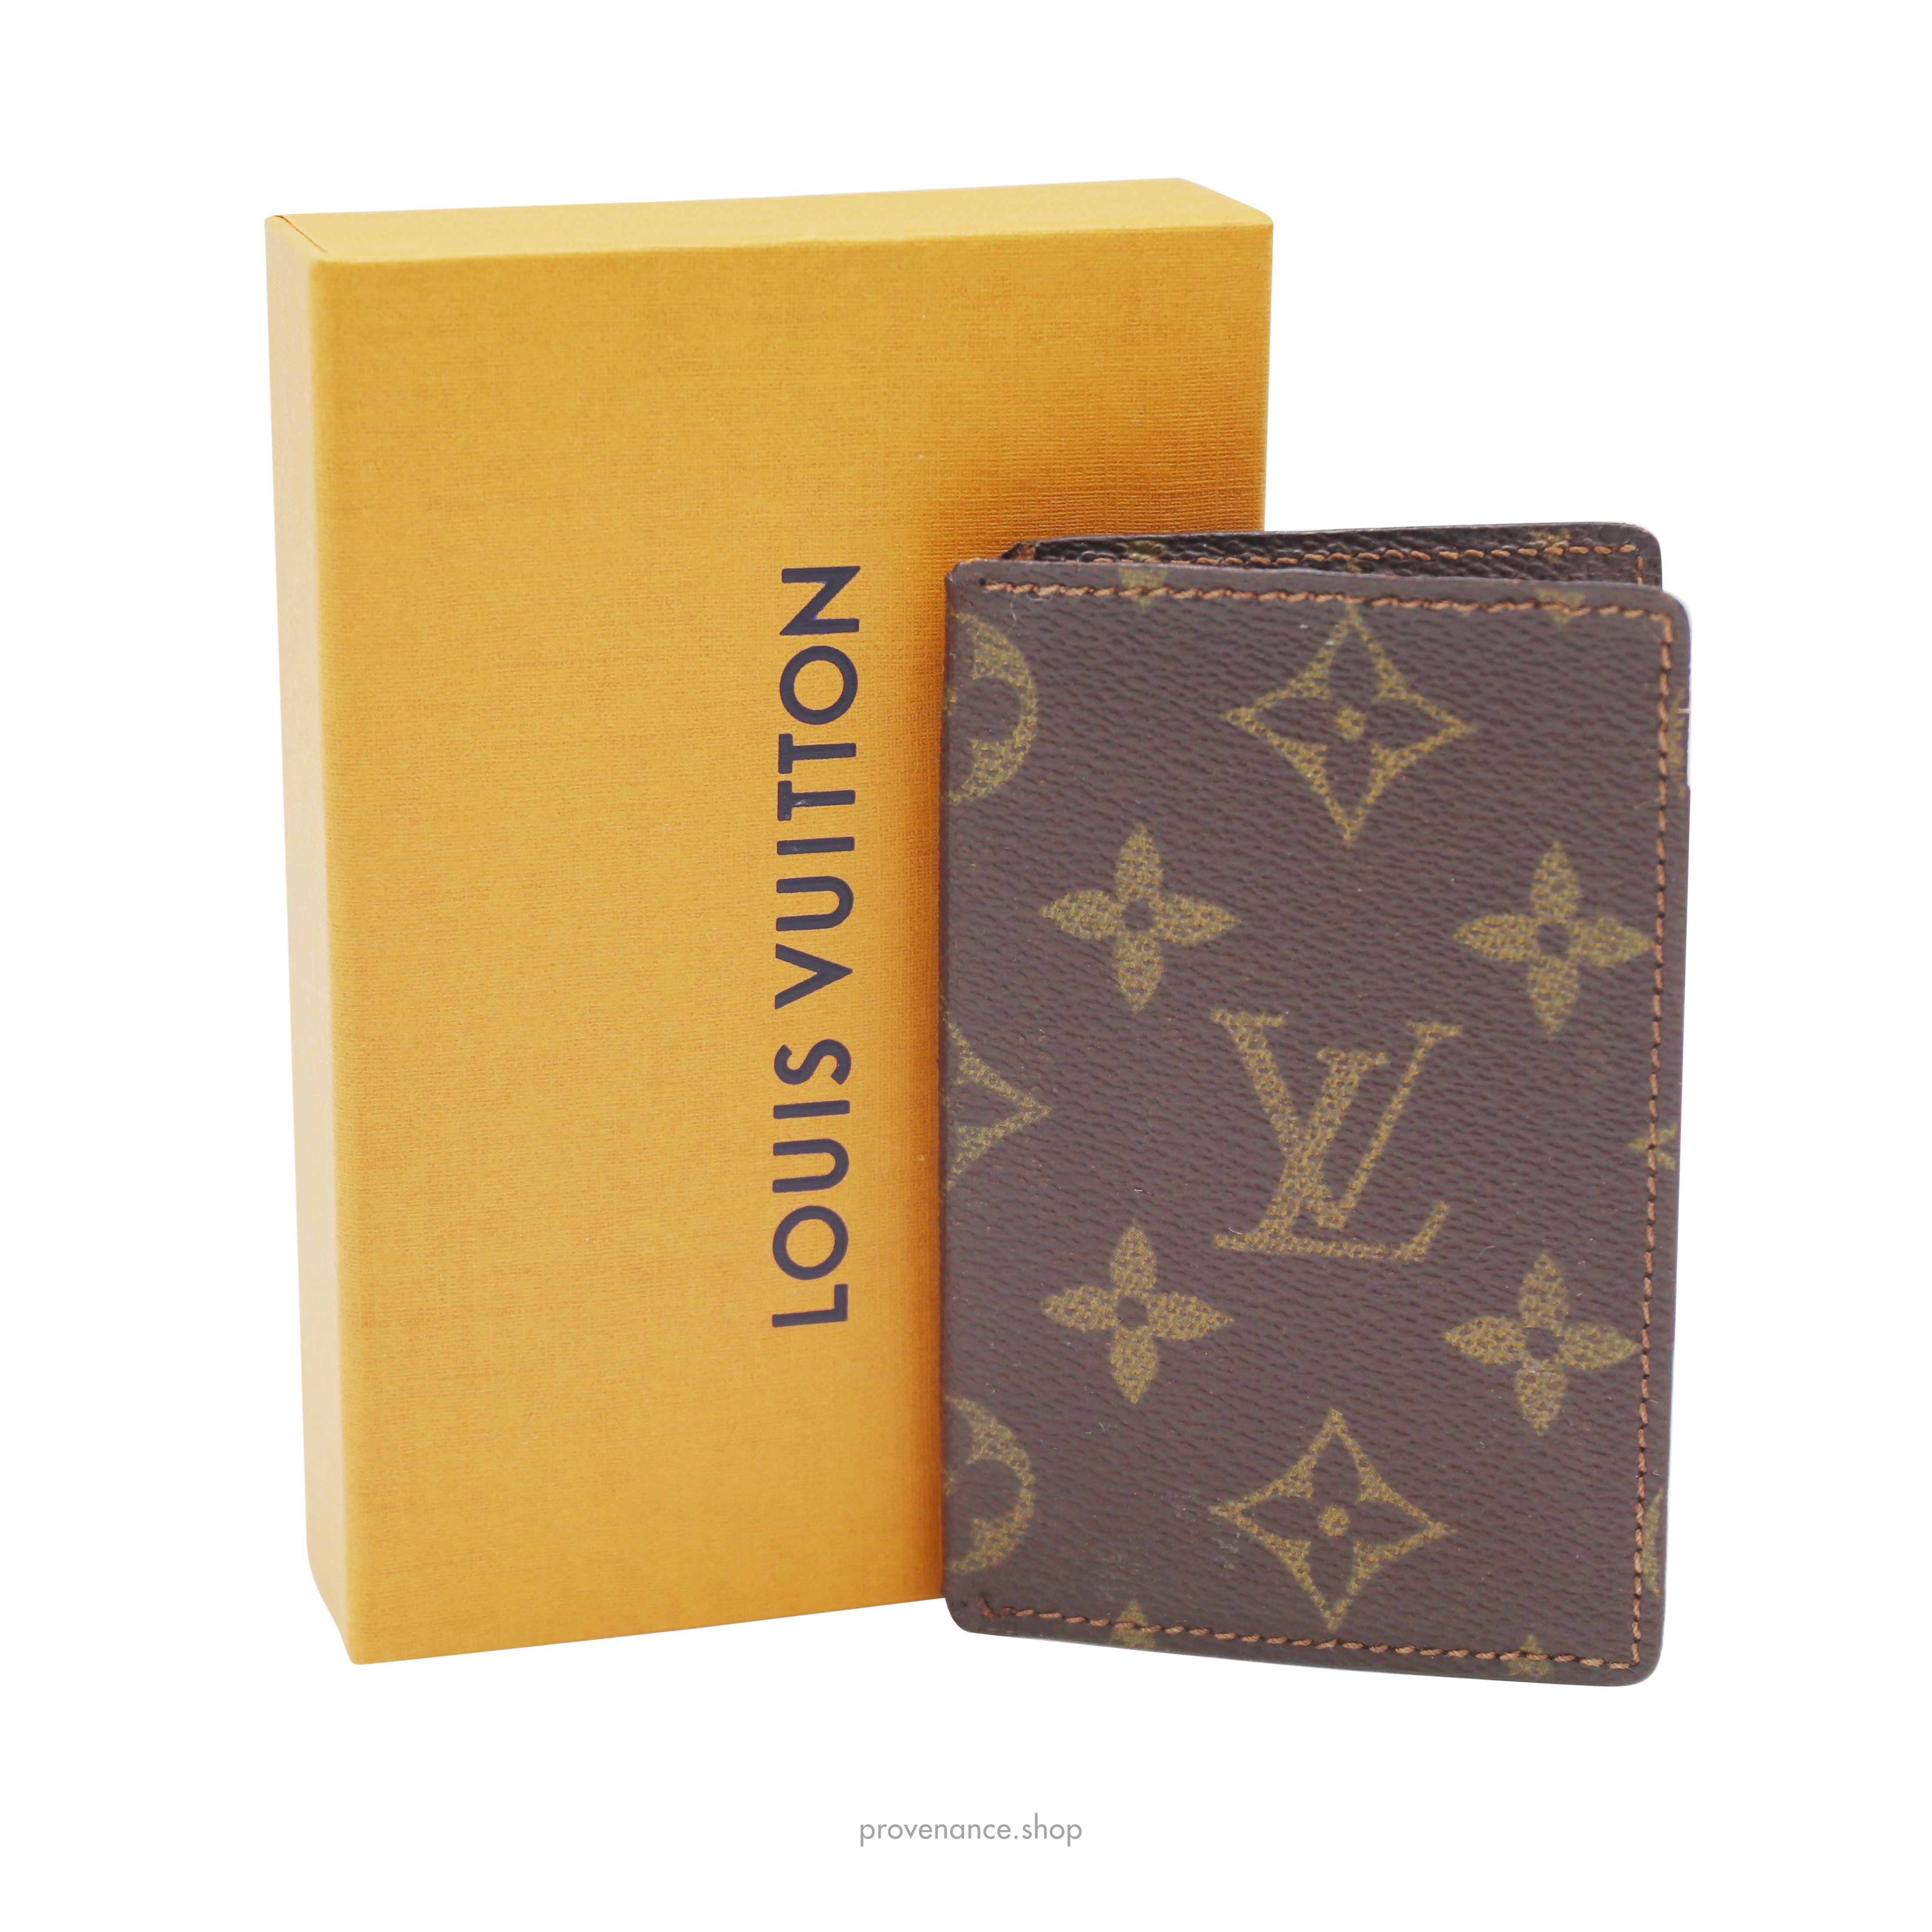 Louis Vuitton Pocket Organizer Monogram